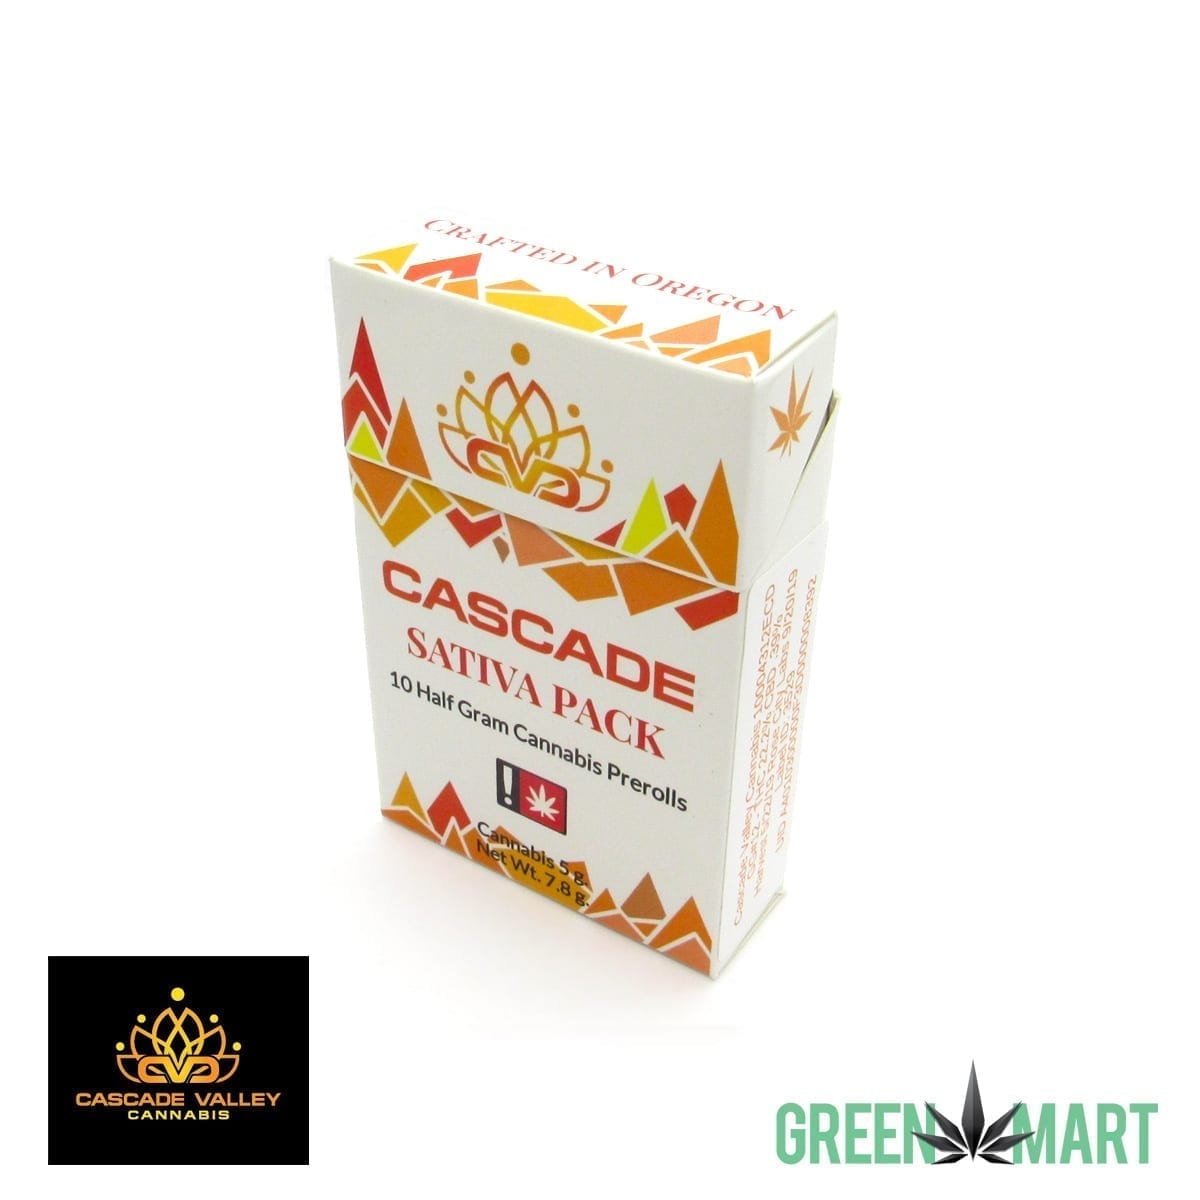 Cascade Valley Cannabis 10 Preroll Pack - Sativa